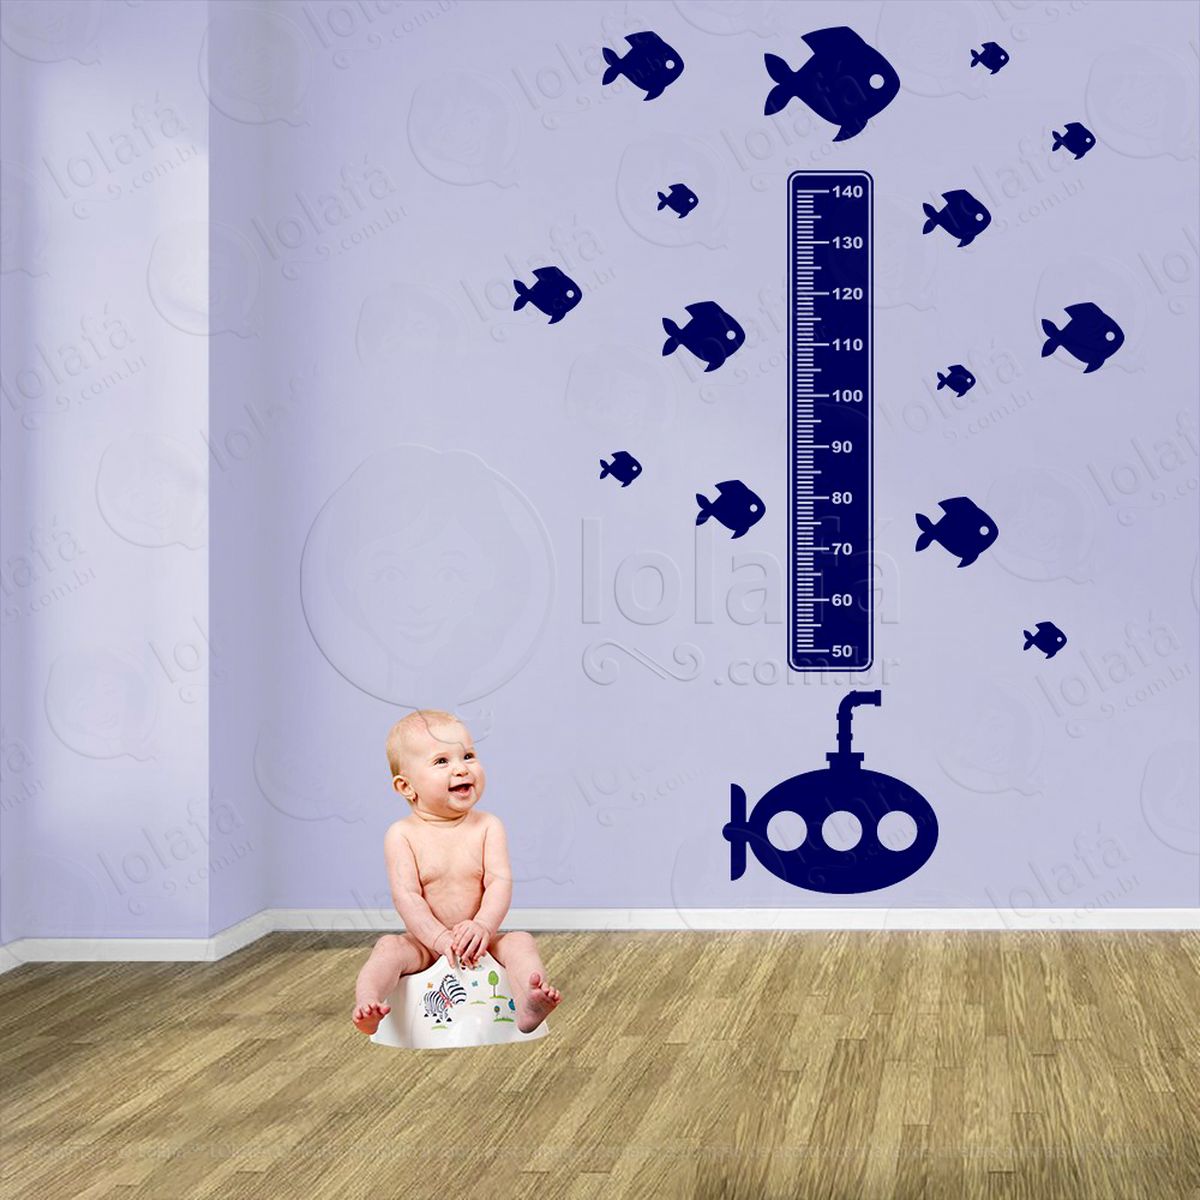 submarino e peixes adesivo régua de crescimento infantil, medidor de altura para quarto, porta e parede - mod:1473